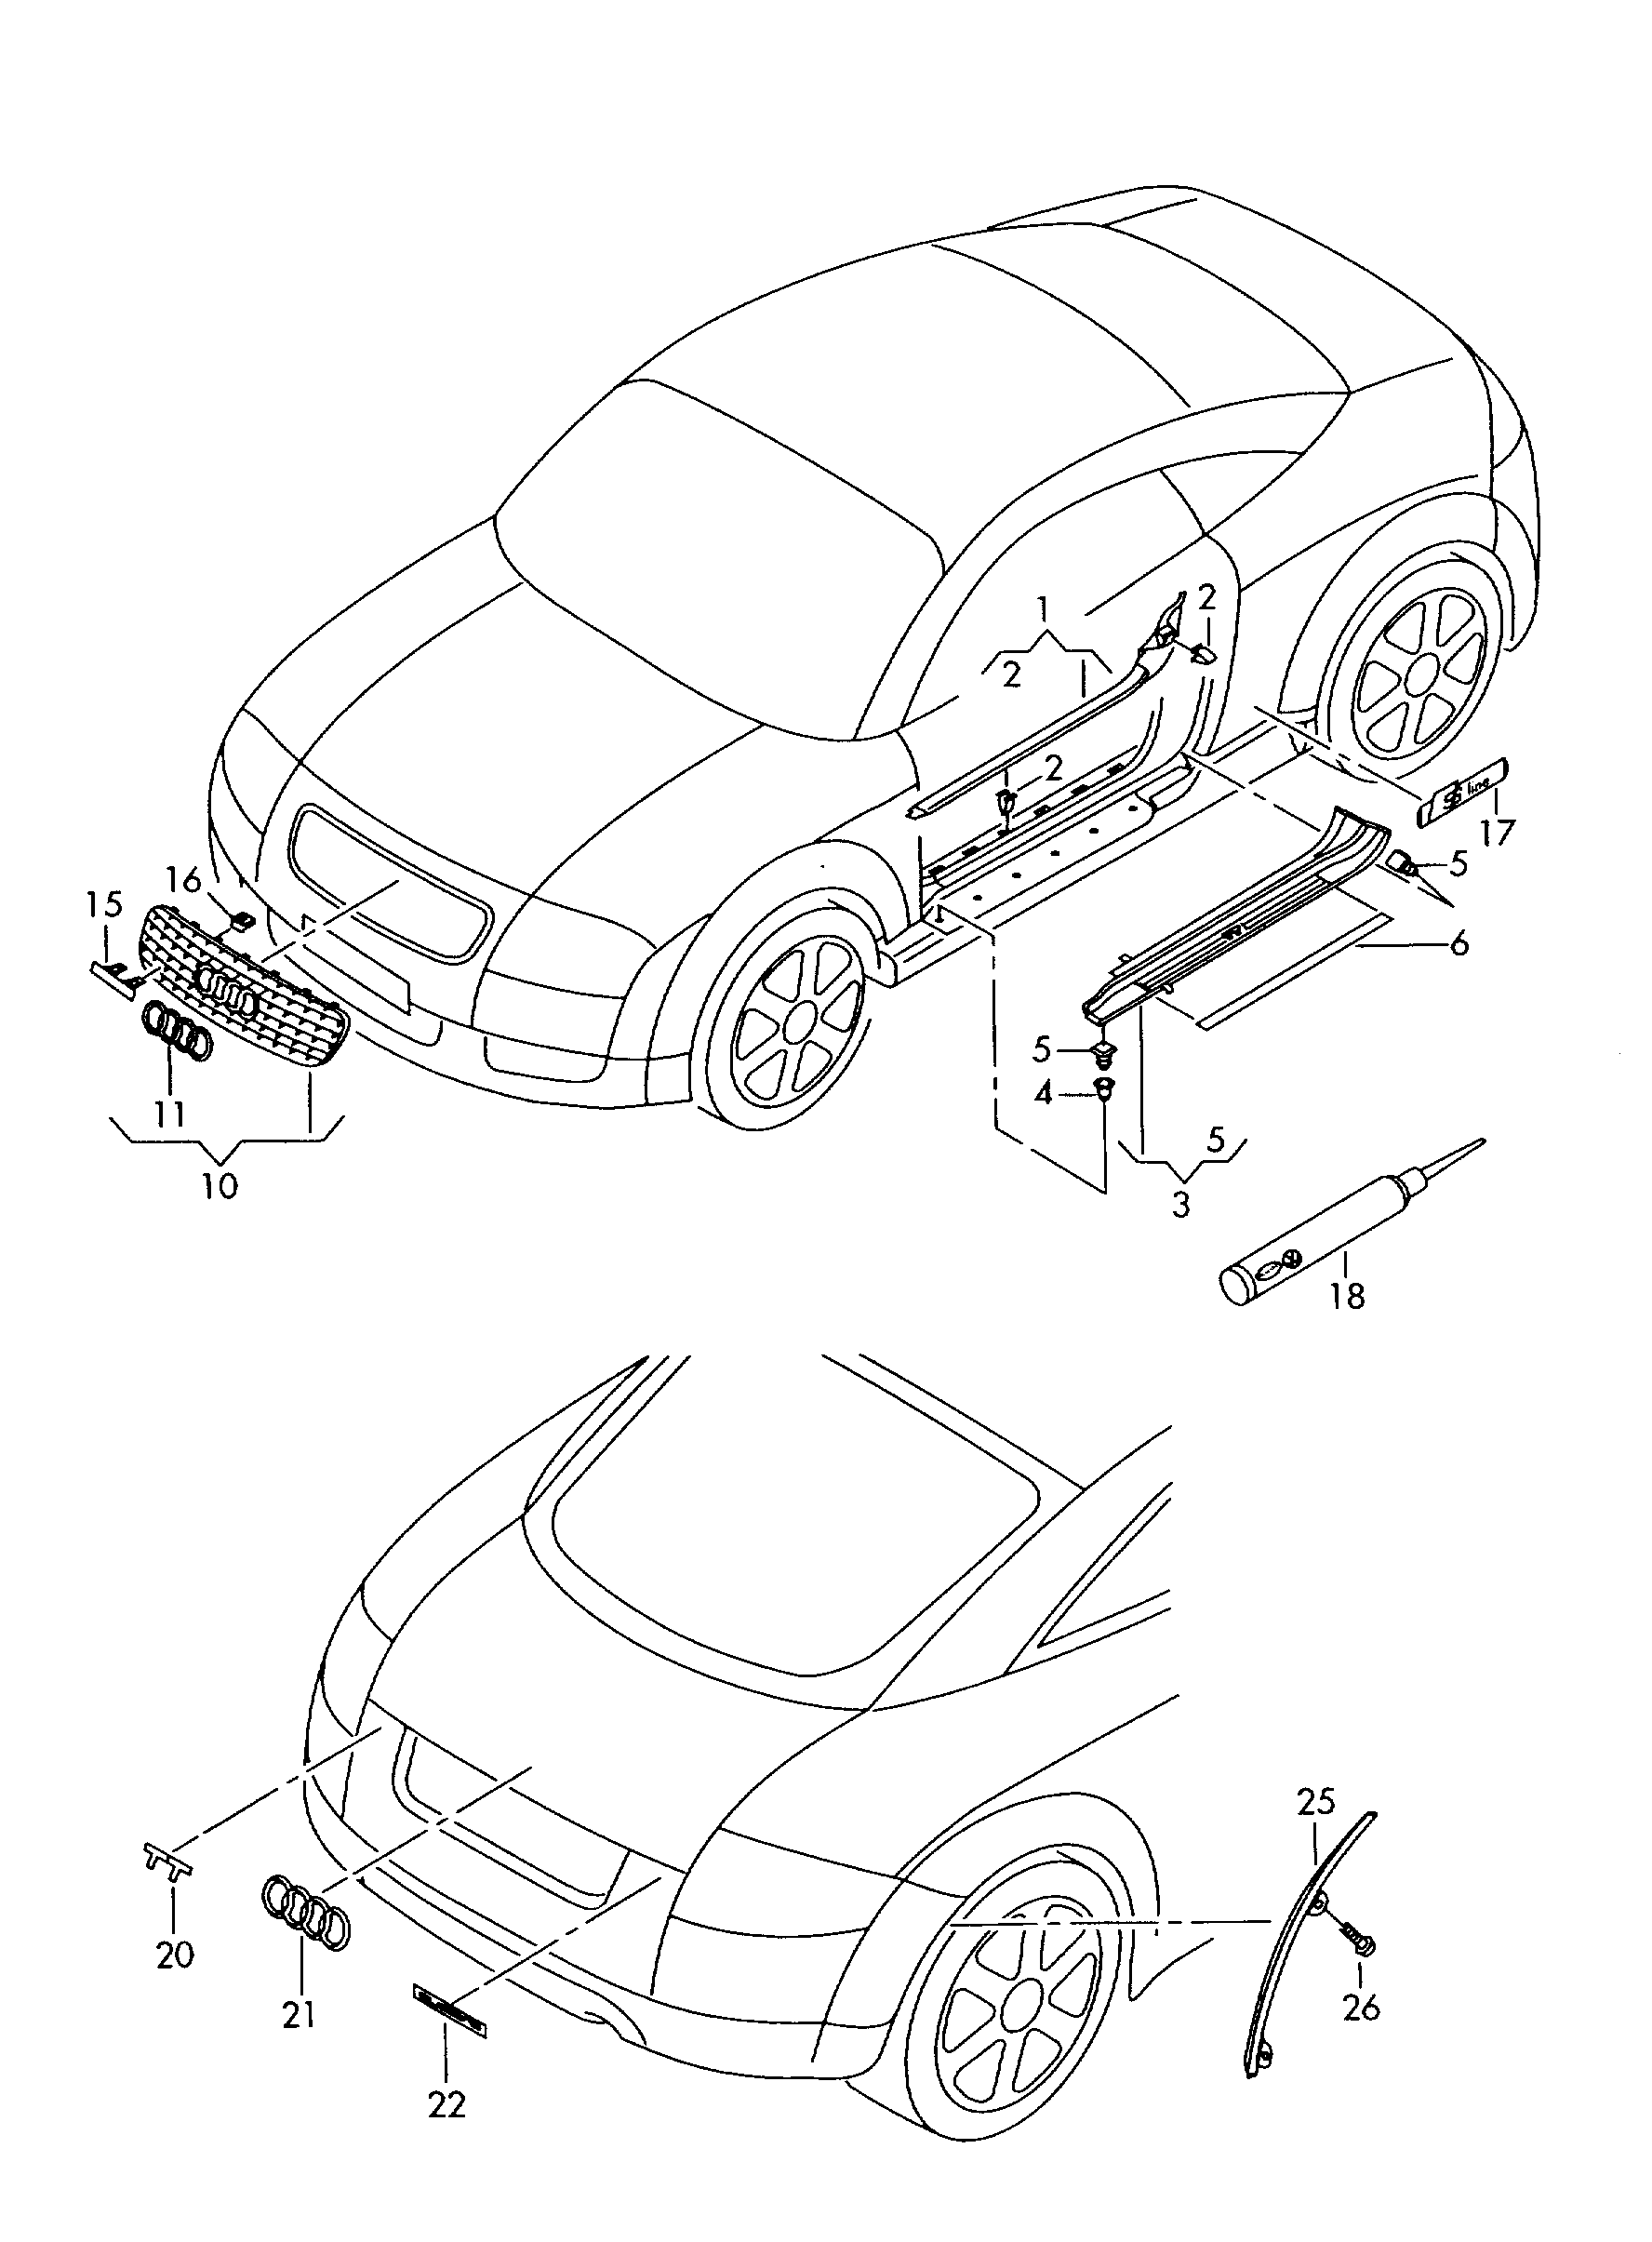 inscriptions/lettering - Audi TT/TTS Coupe/Roadster(ATT)  